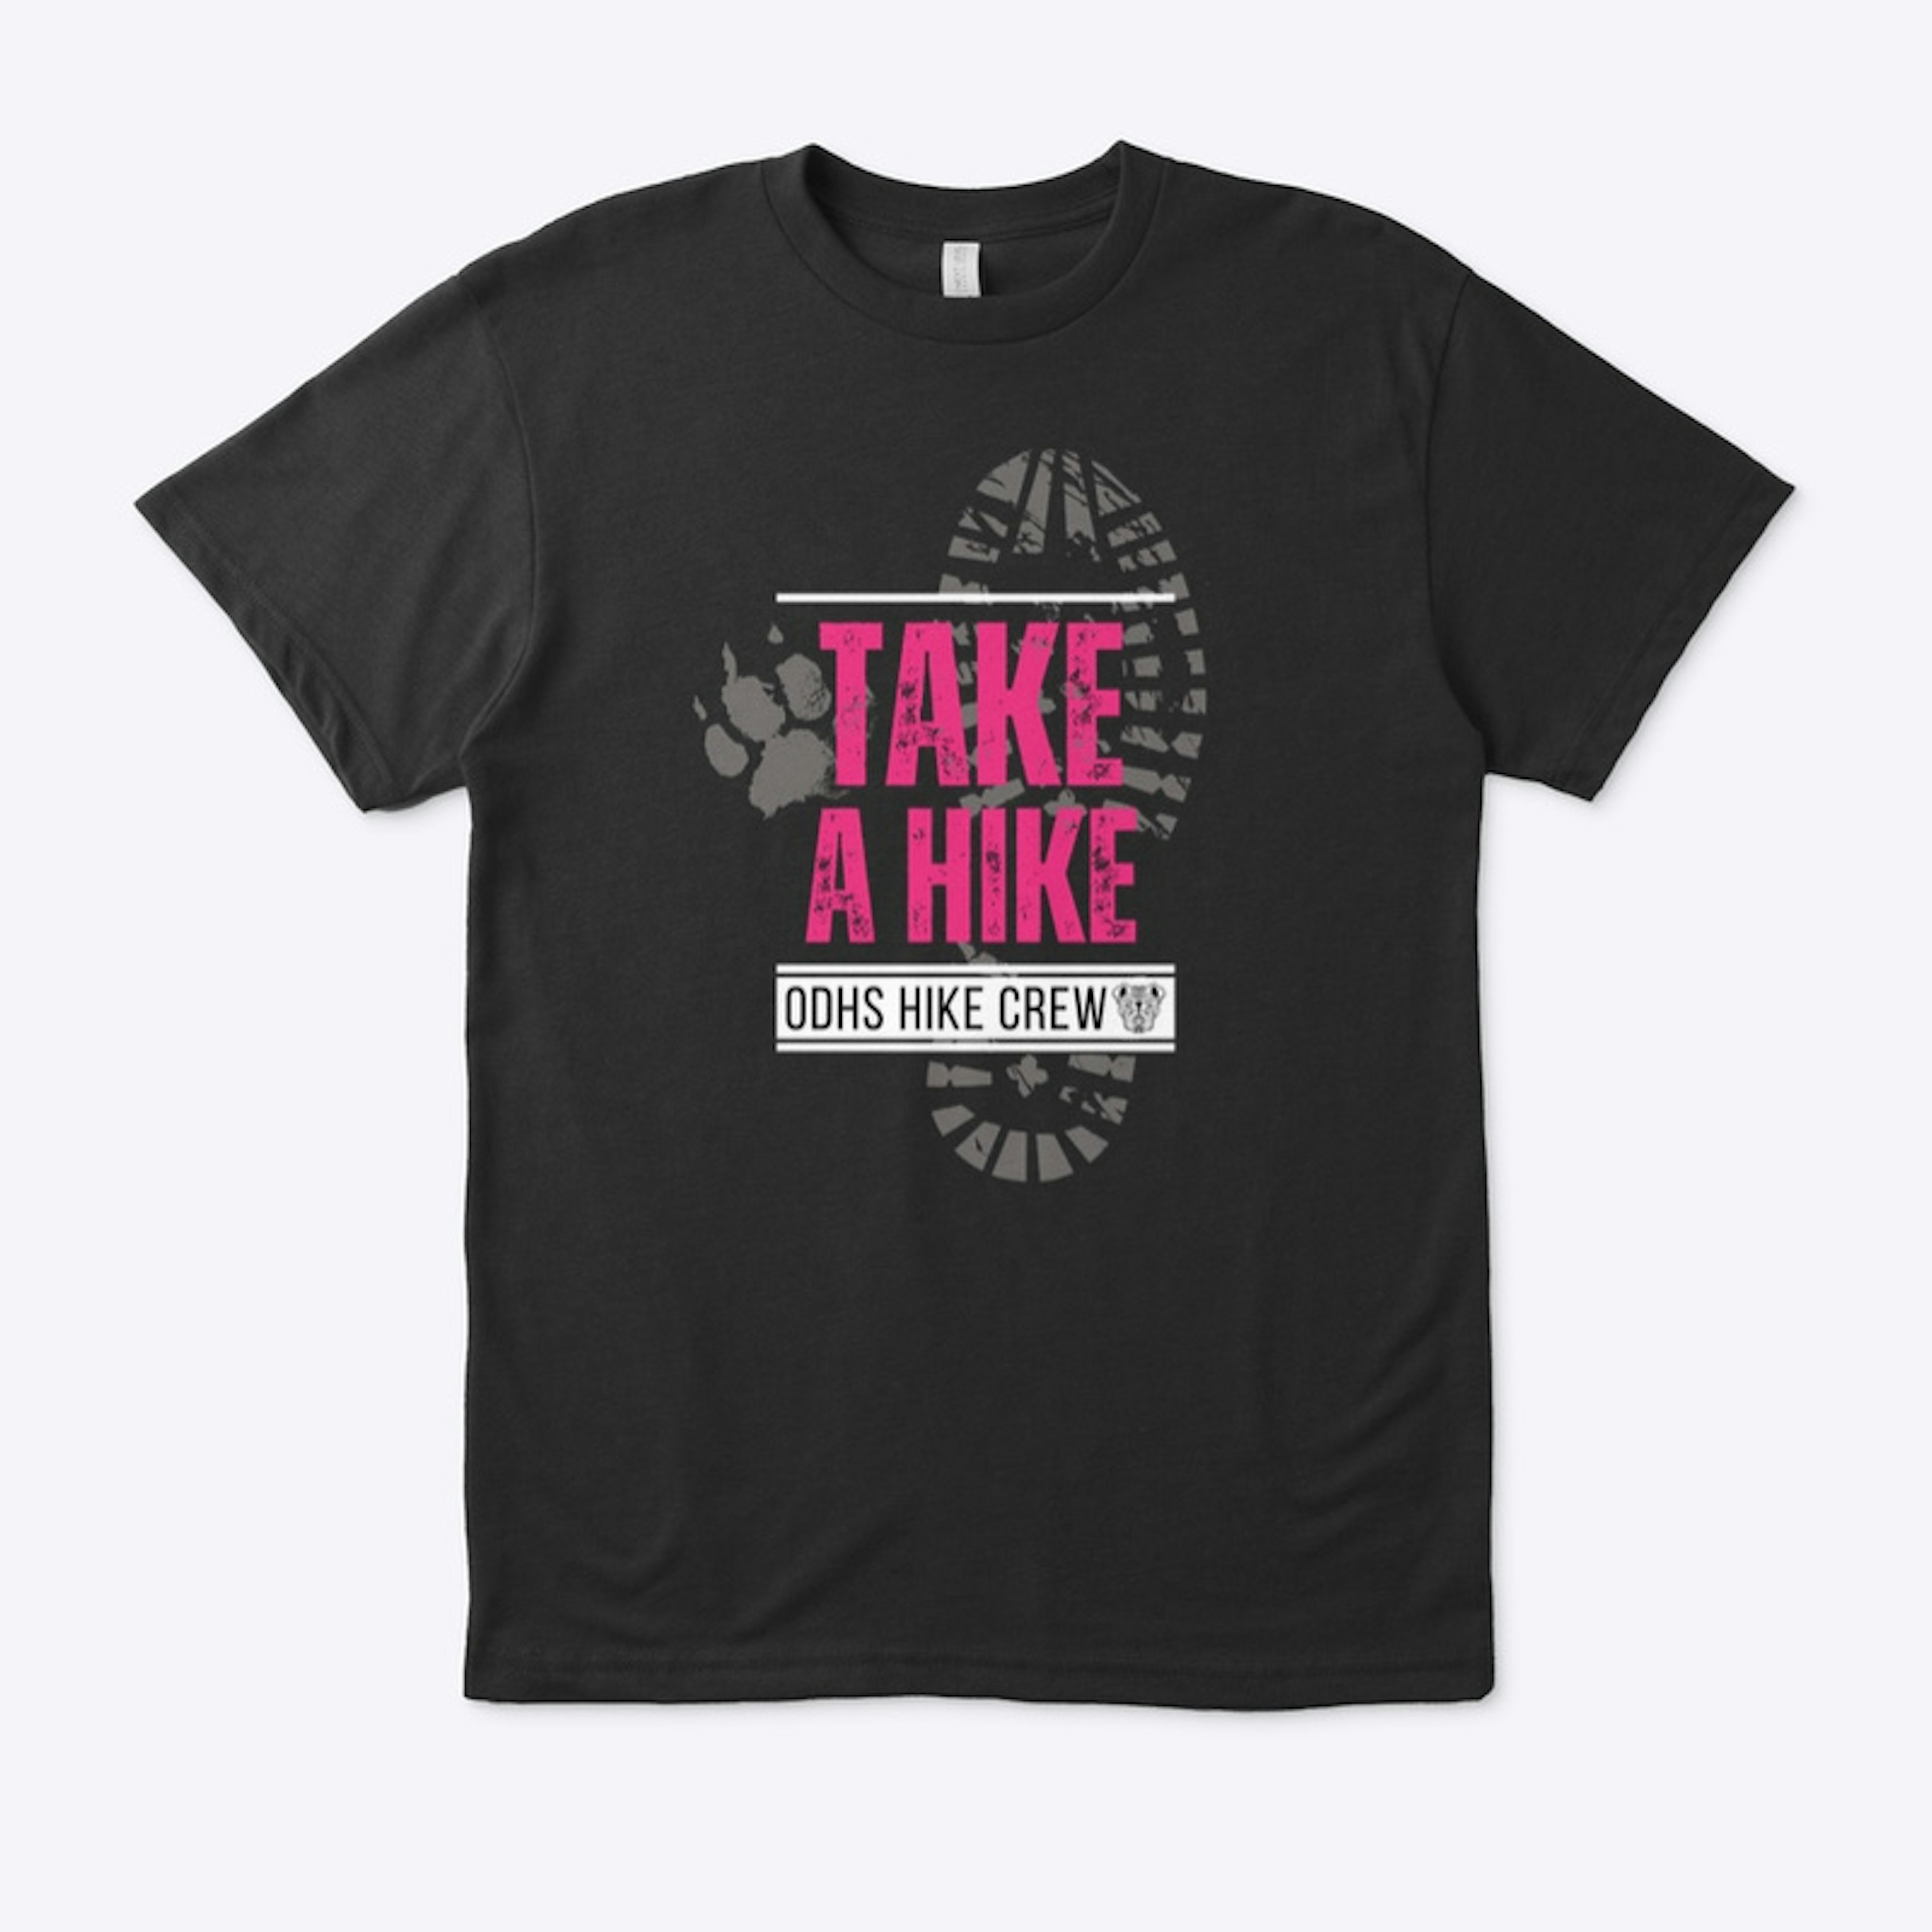 ODHS “Take a Hike” T-Shirt